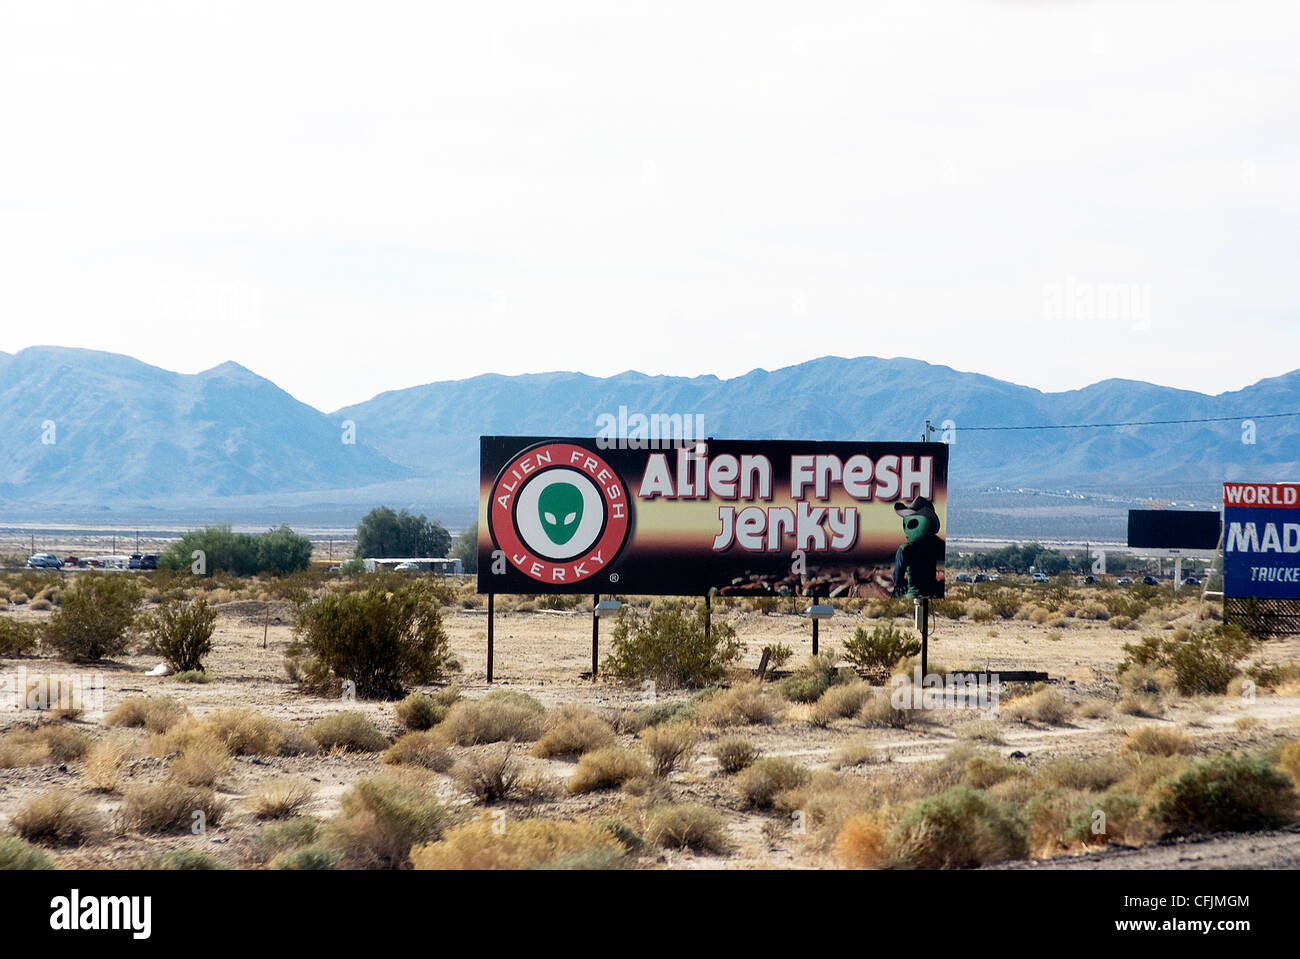 Fresh Alien Jerky, near Area 51, Baker, California, United States of America, North America Stock Photo